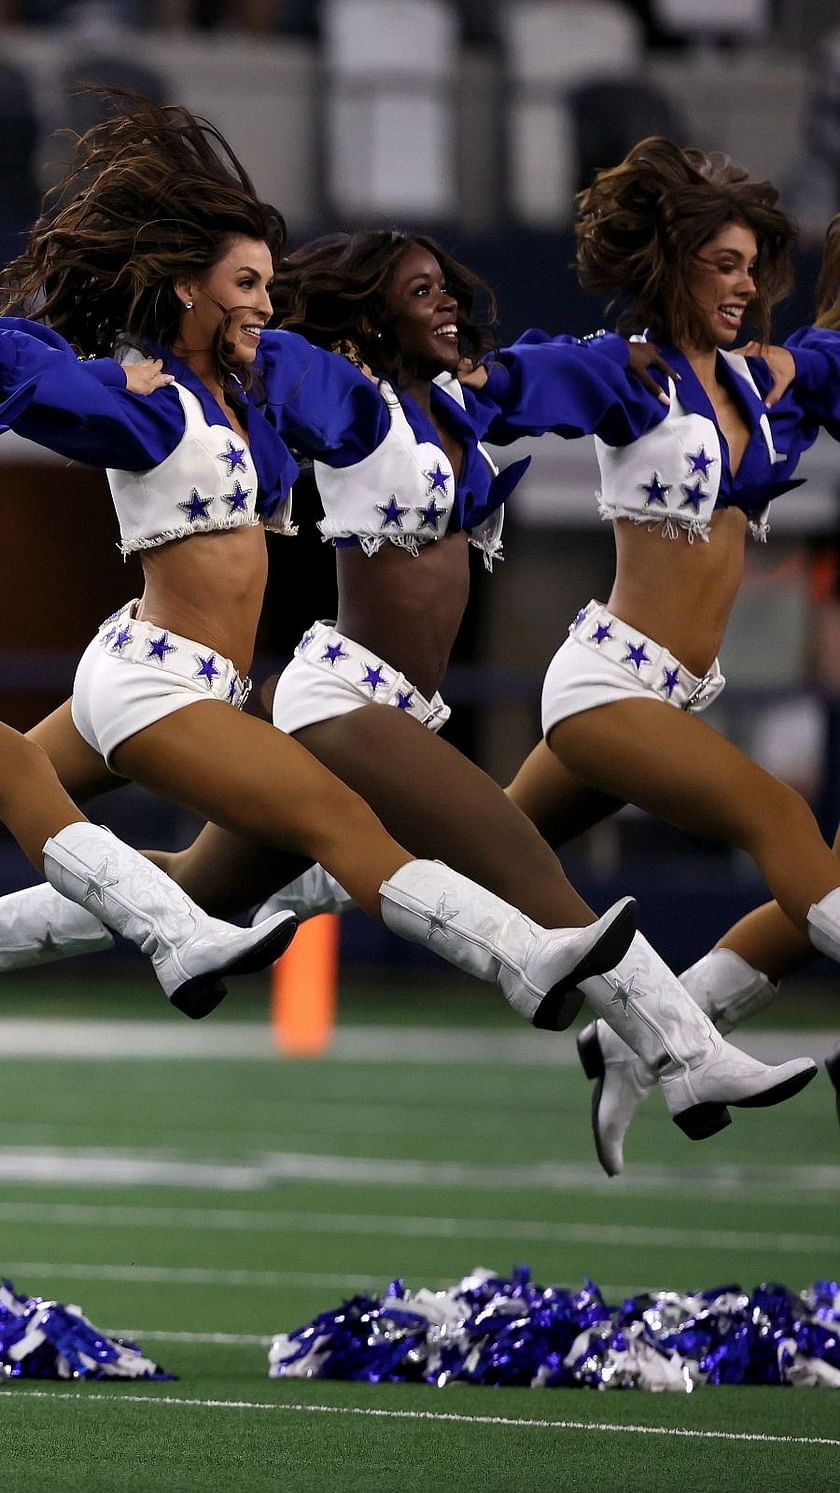 Dallas Cowboys cheerleader's engagement video wins the Internet